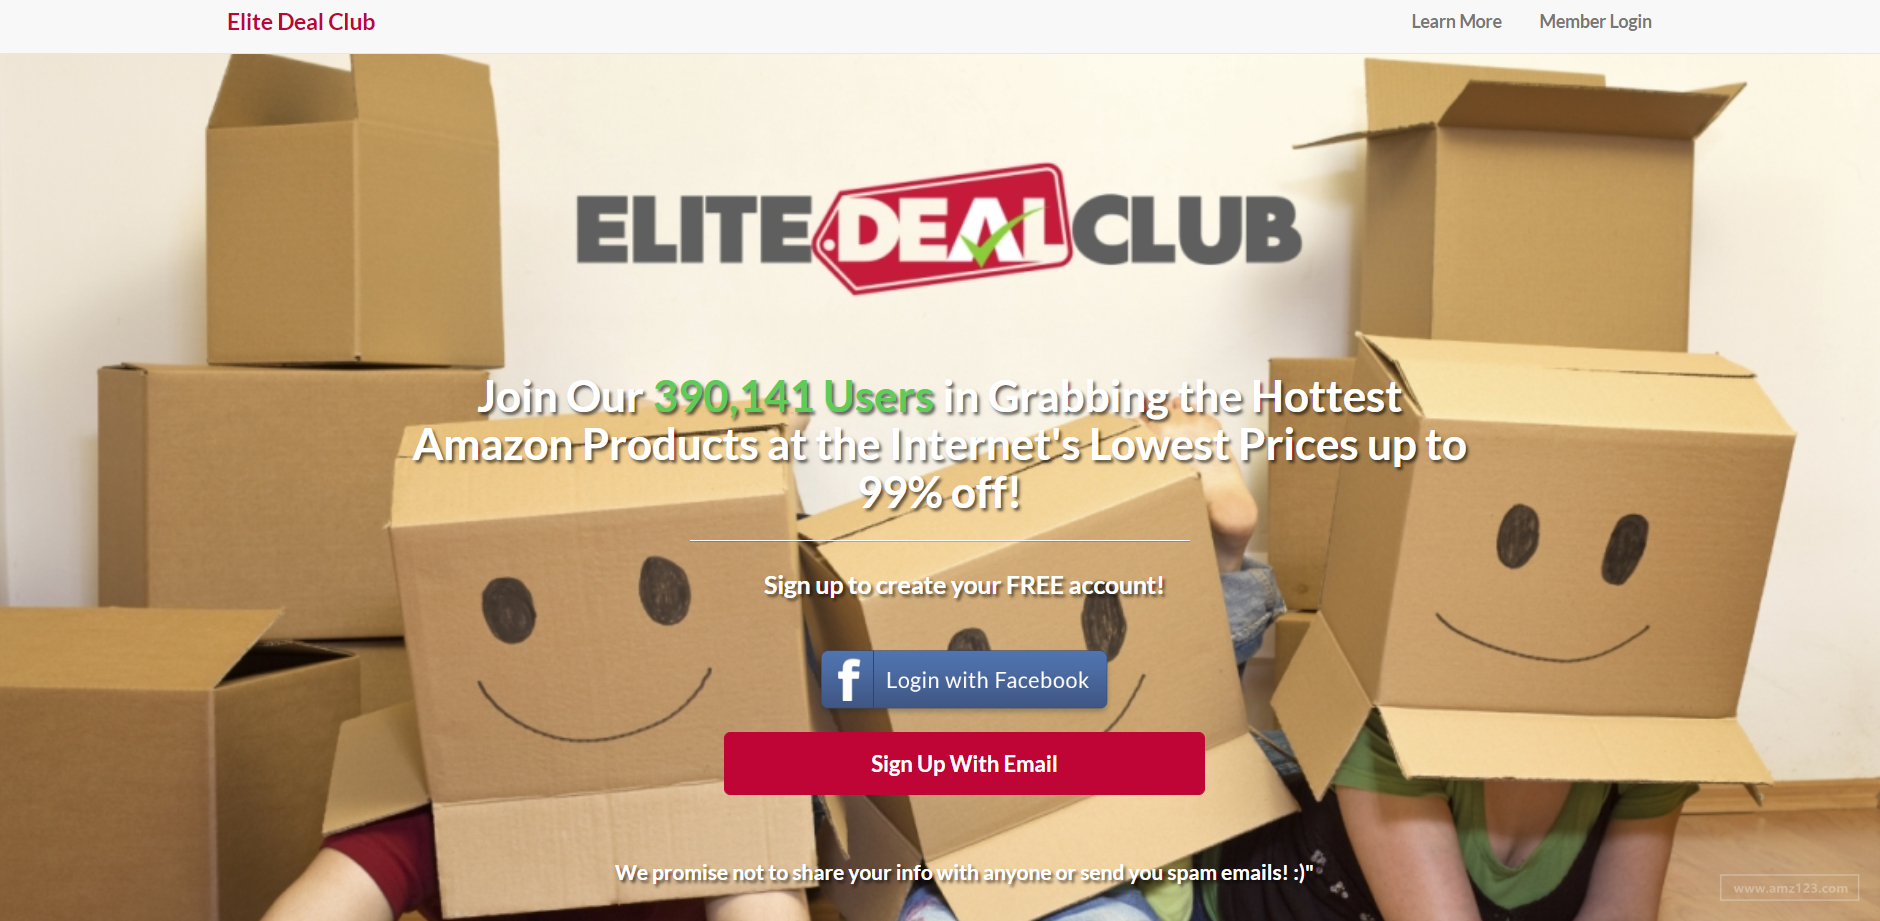 Elite Deal Club